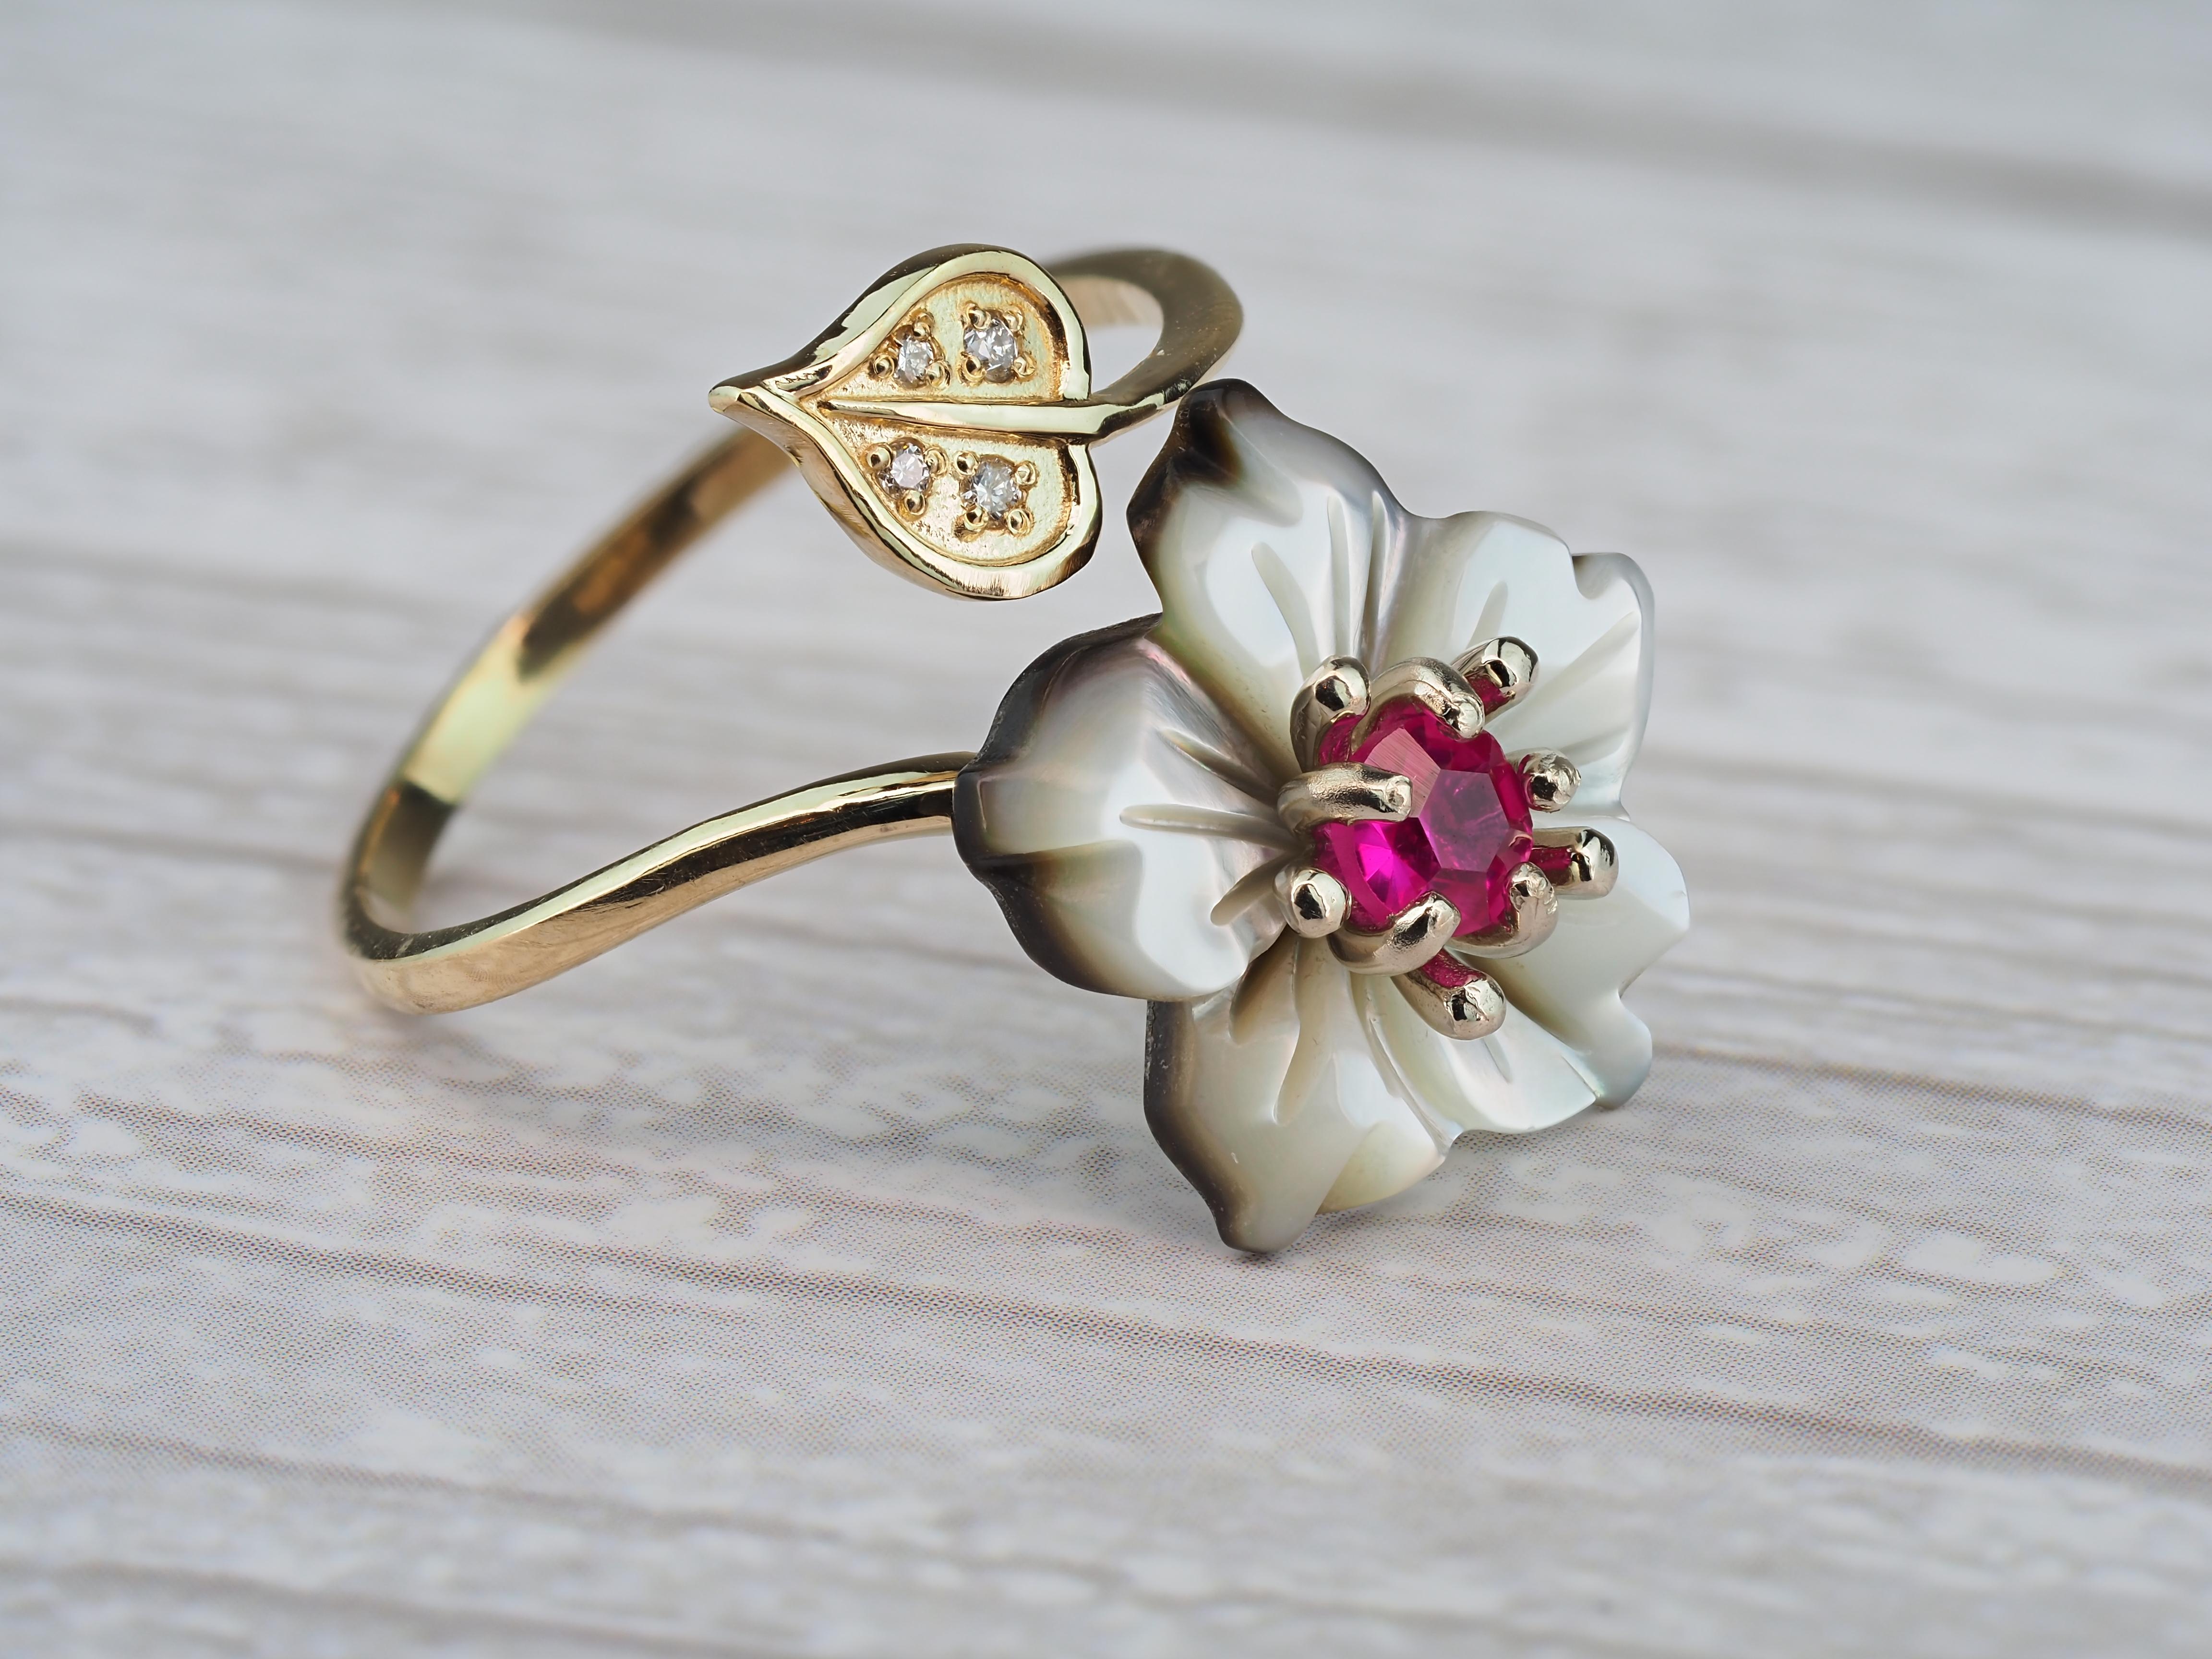 For Sale:  Carved Flower 14k ring with gemstones. 8